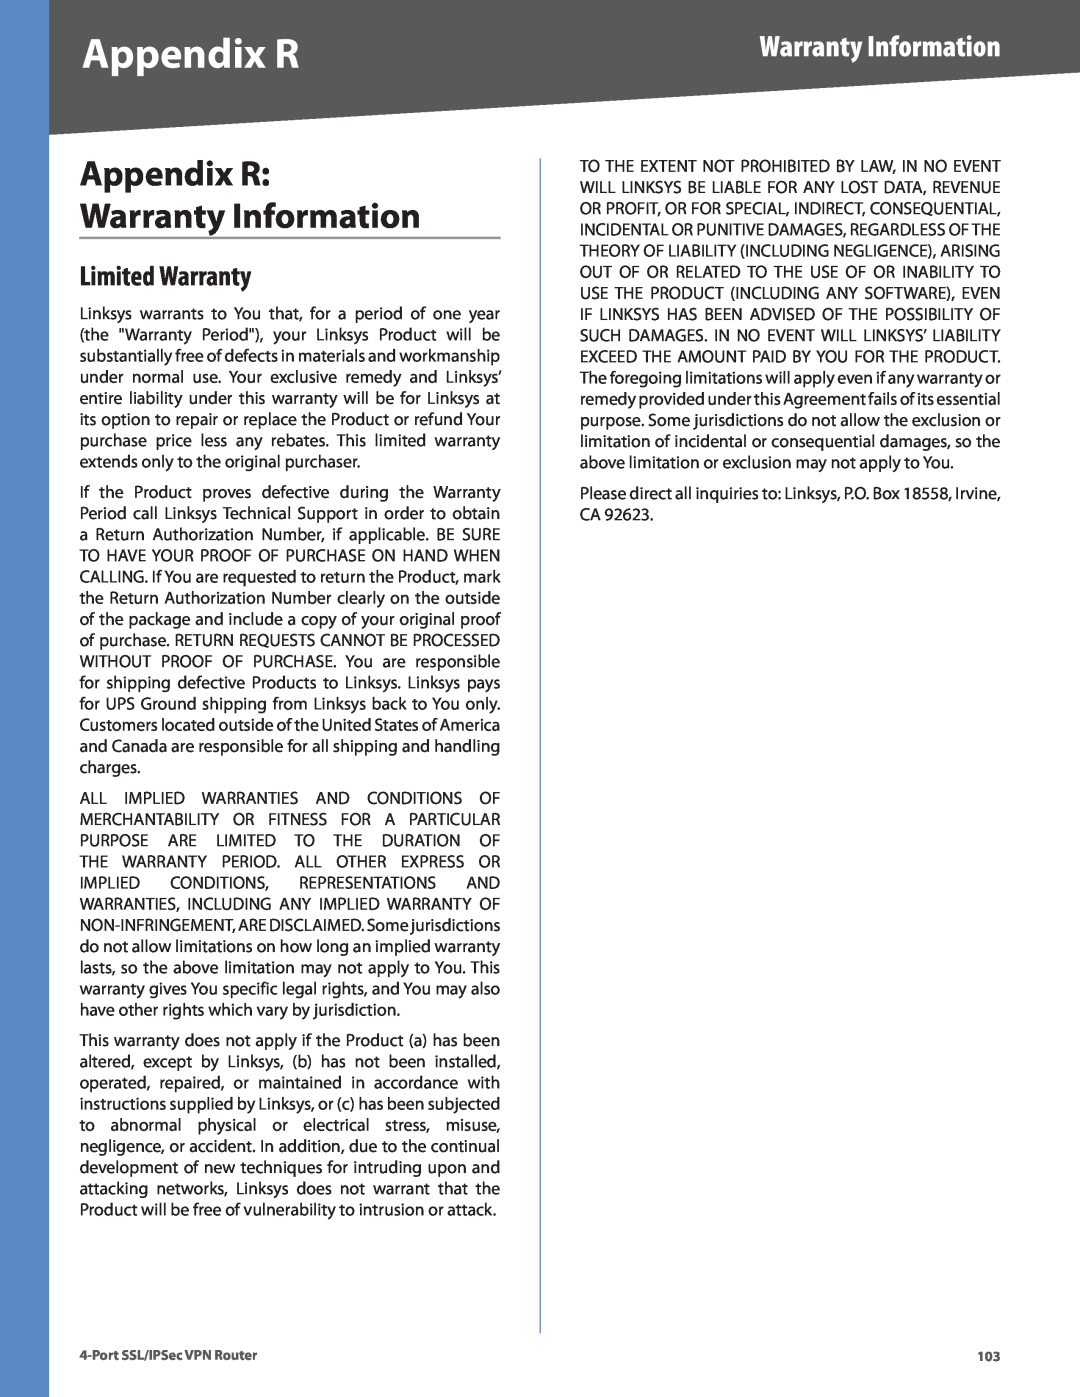 Cisco Systems RVL200 manual Appendix R Warranty Information, Limited Warranty 